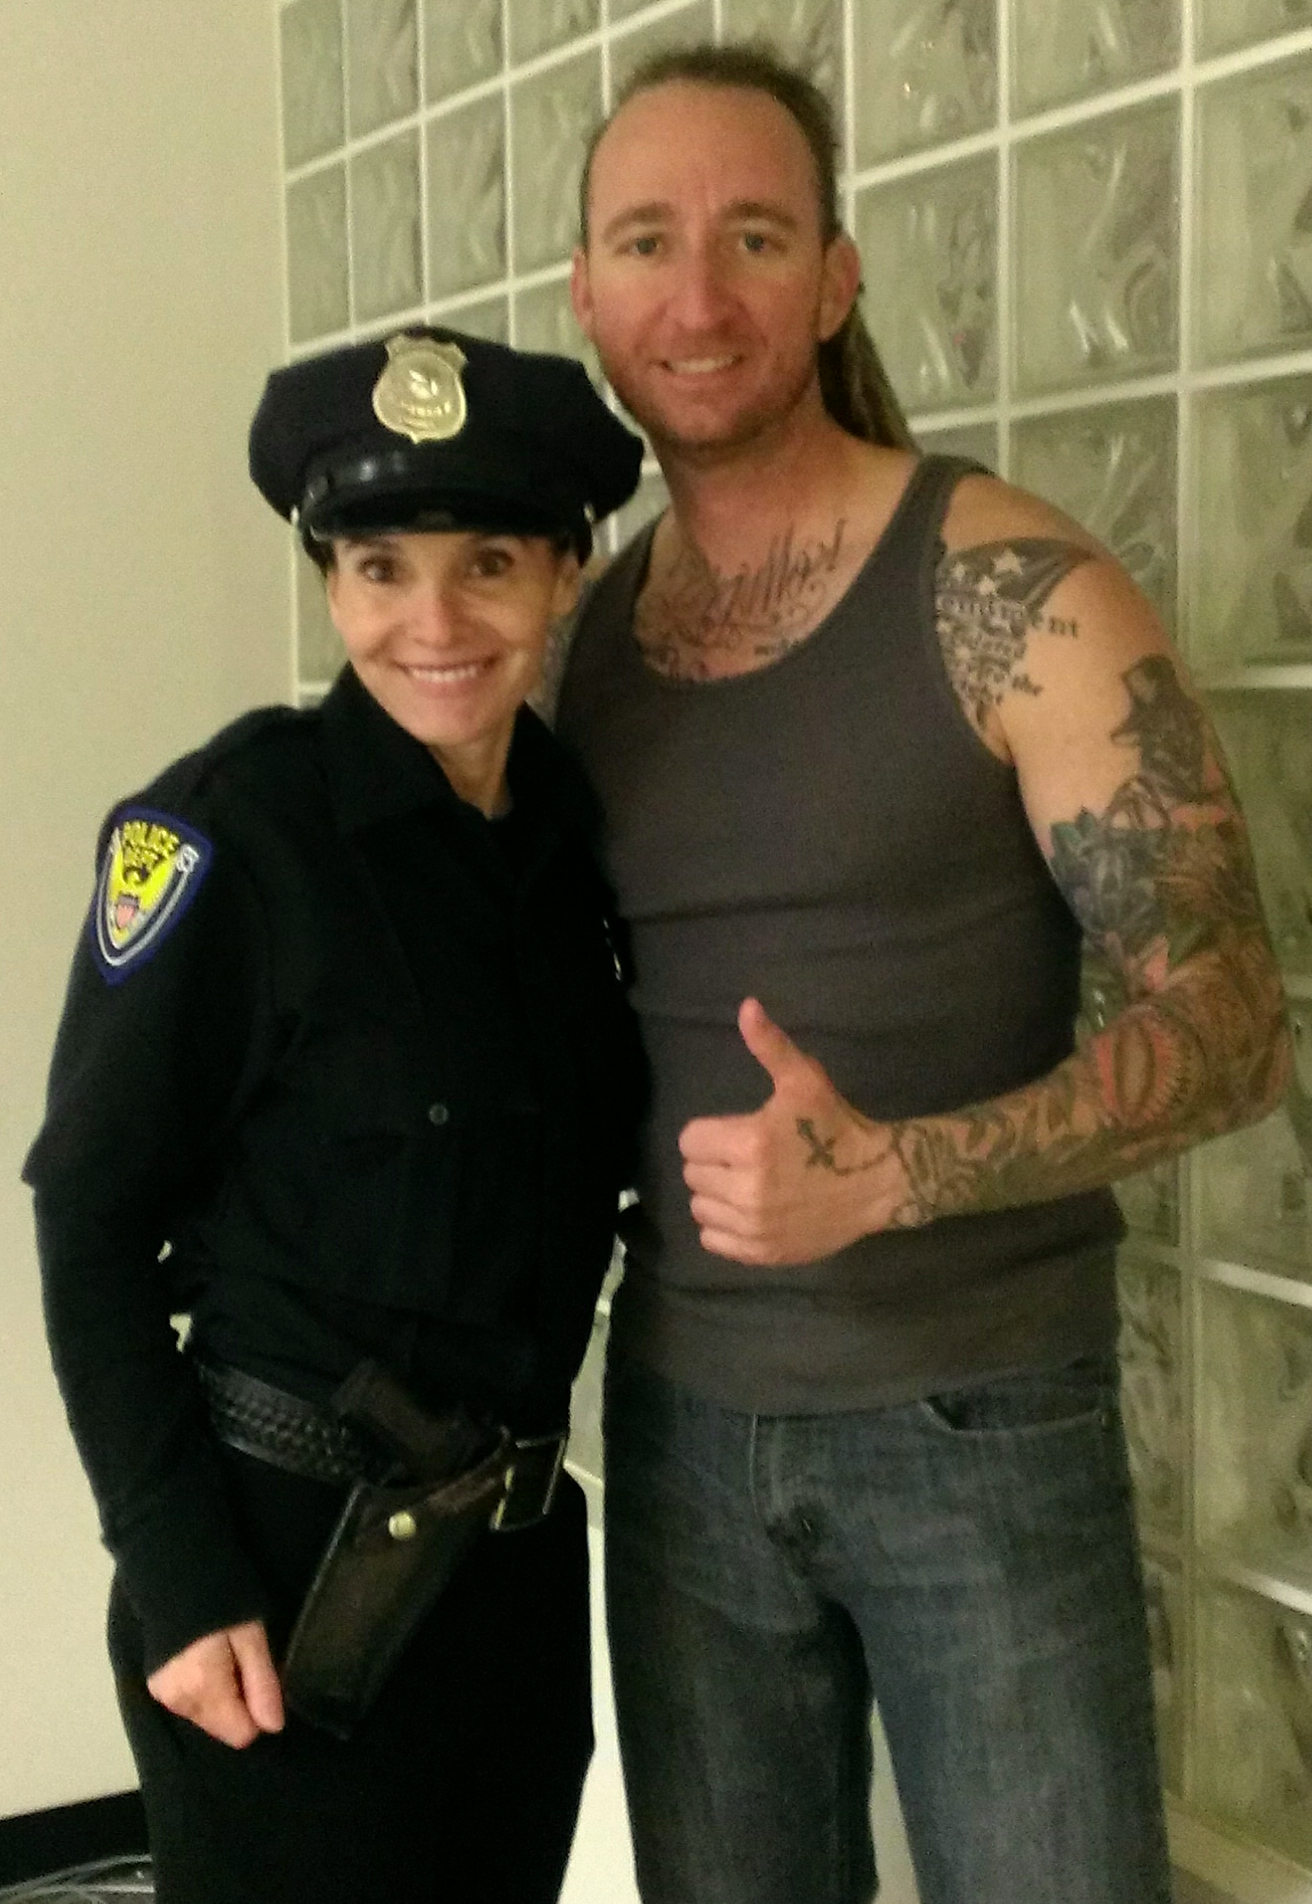 On set of Swamp Murders.Aimee Dunn as my arresting officer, Myself as Neo Nazi Sean Haines.